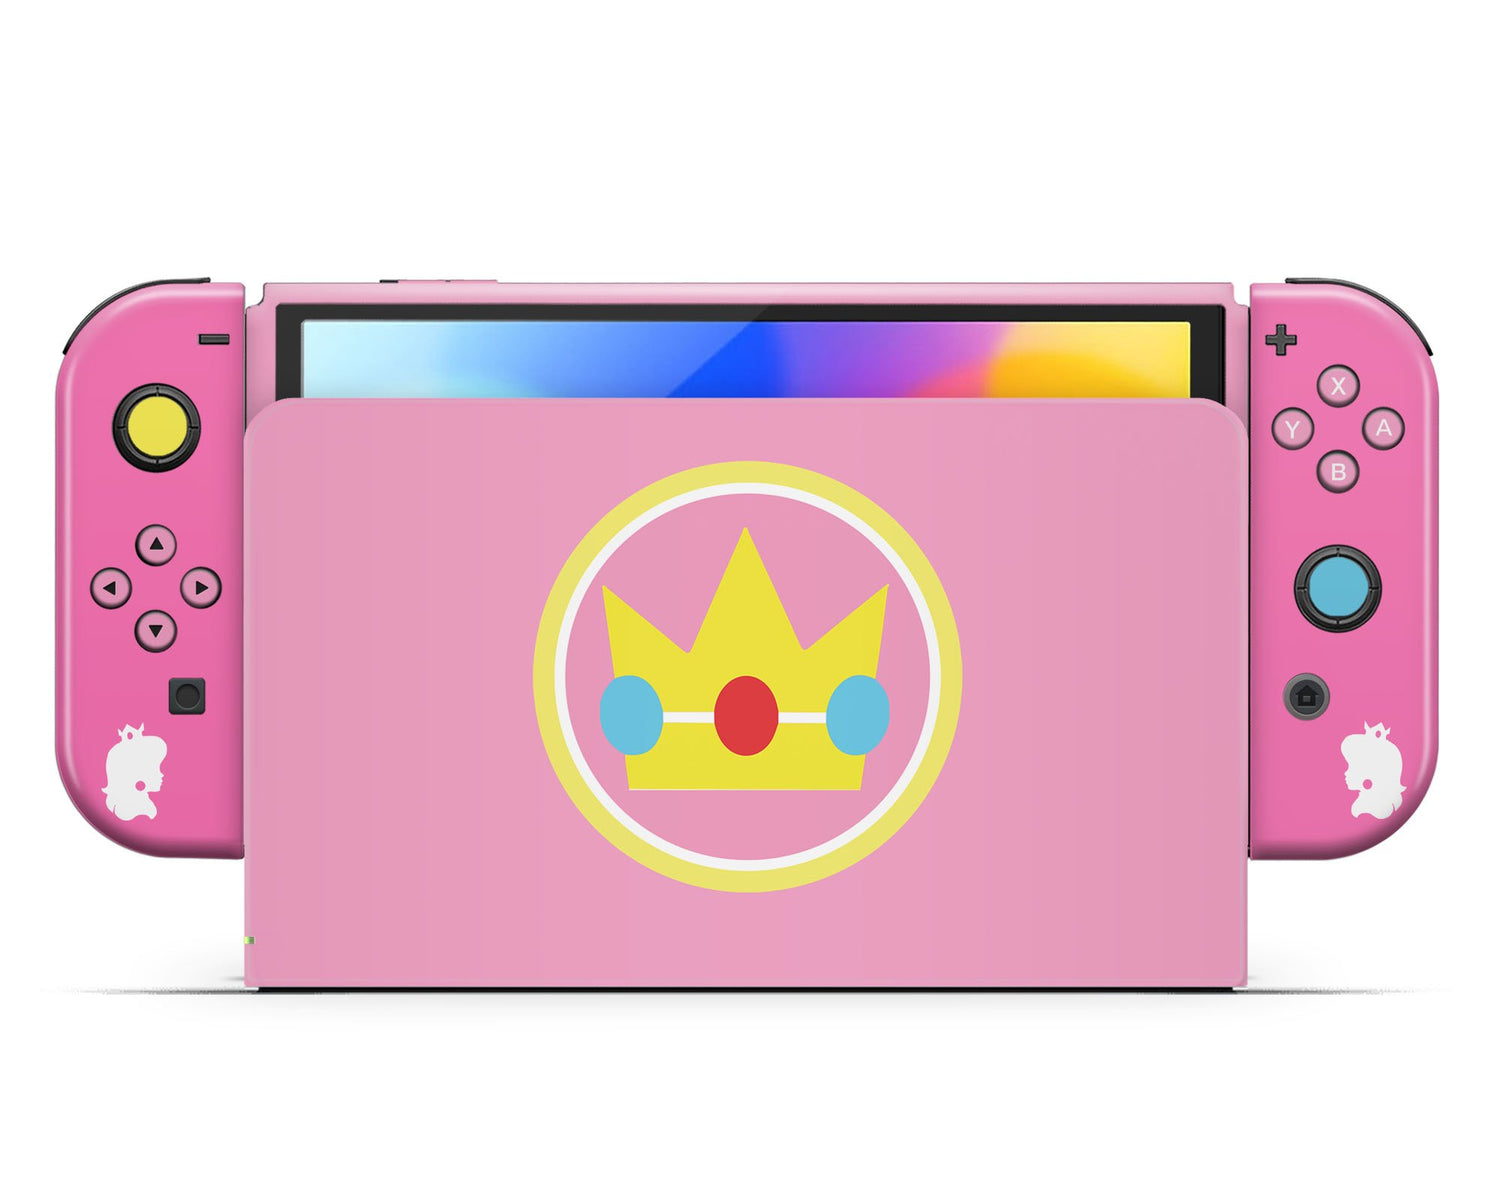 Skin y Protector Set Nintendo Switch Mario Kart 8 Princess Peach